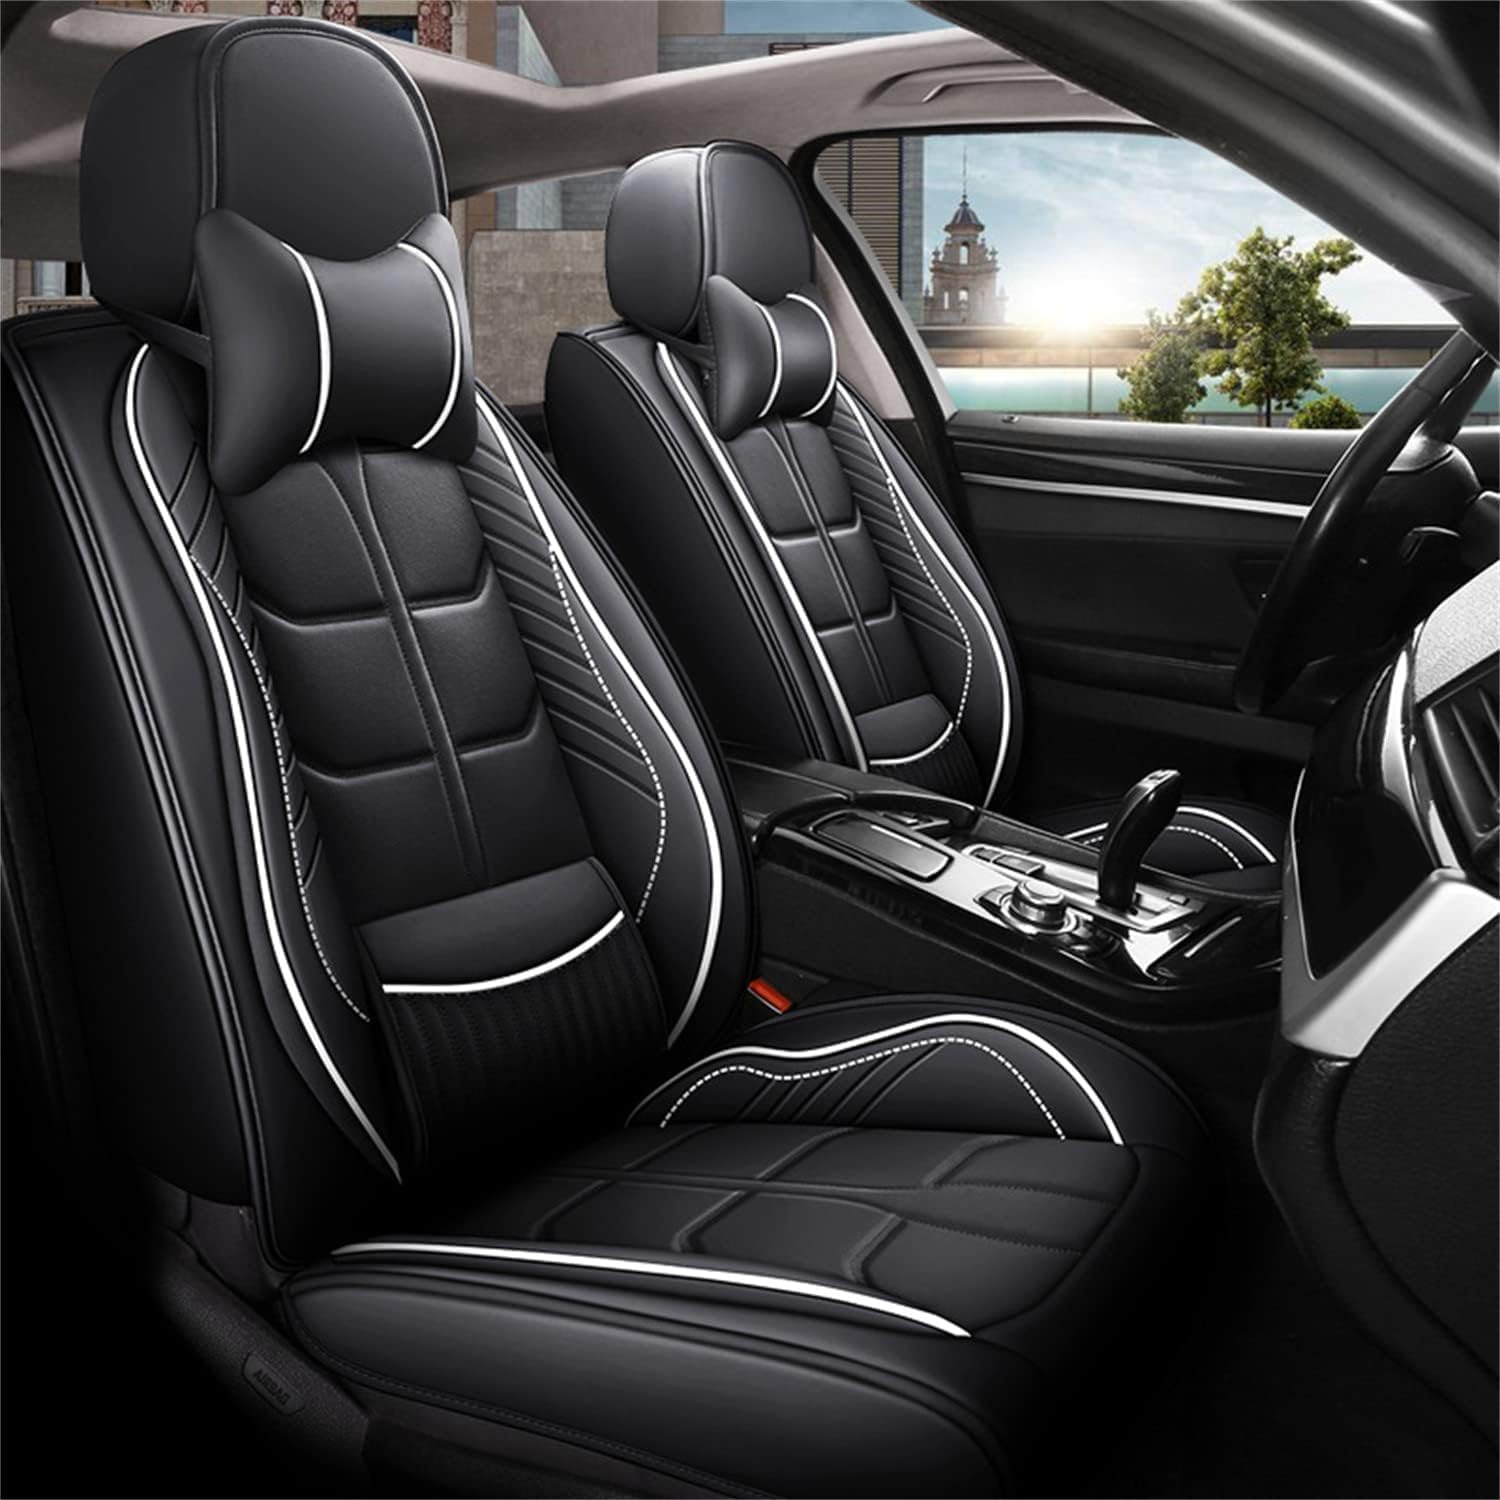 NPORT Auto PU-Leder Sitzbezüge Sets für Lexus GS450H 2012 2013 2014 2016 2017 2018, Komfortabler Dauerhafter Sitzbezug Vordersitze Rücksitze Autositzschoner,A/Blackwhite-Withpillow von NPORT